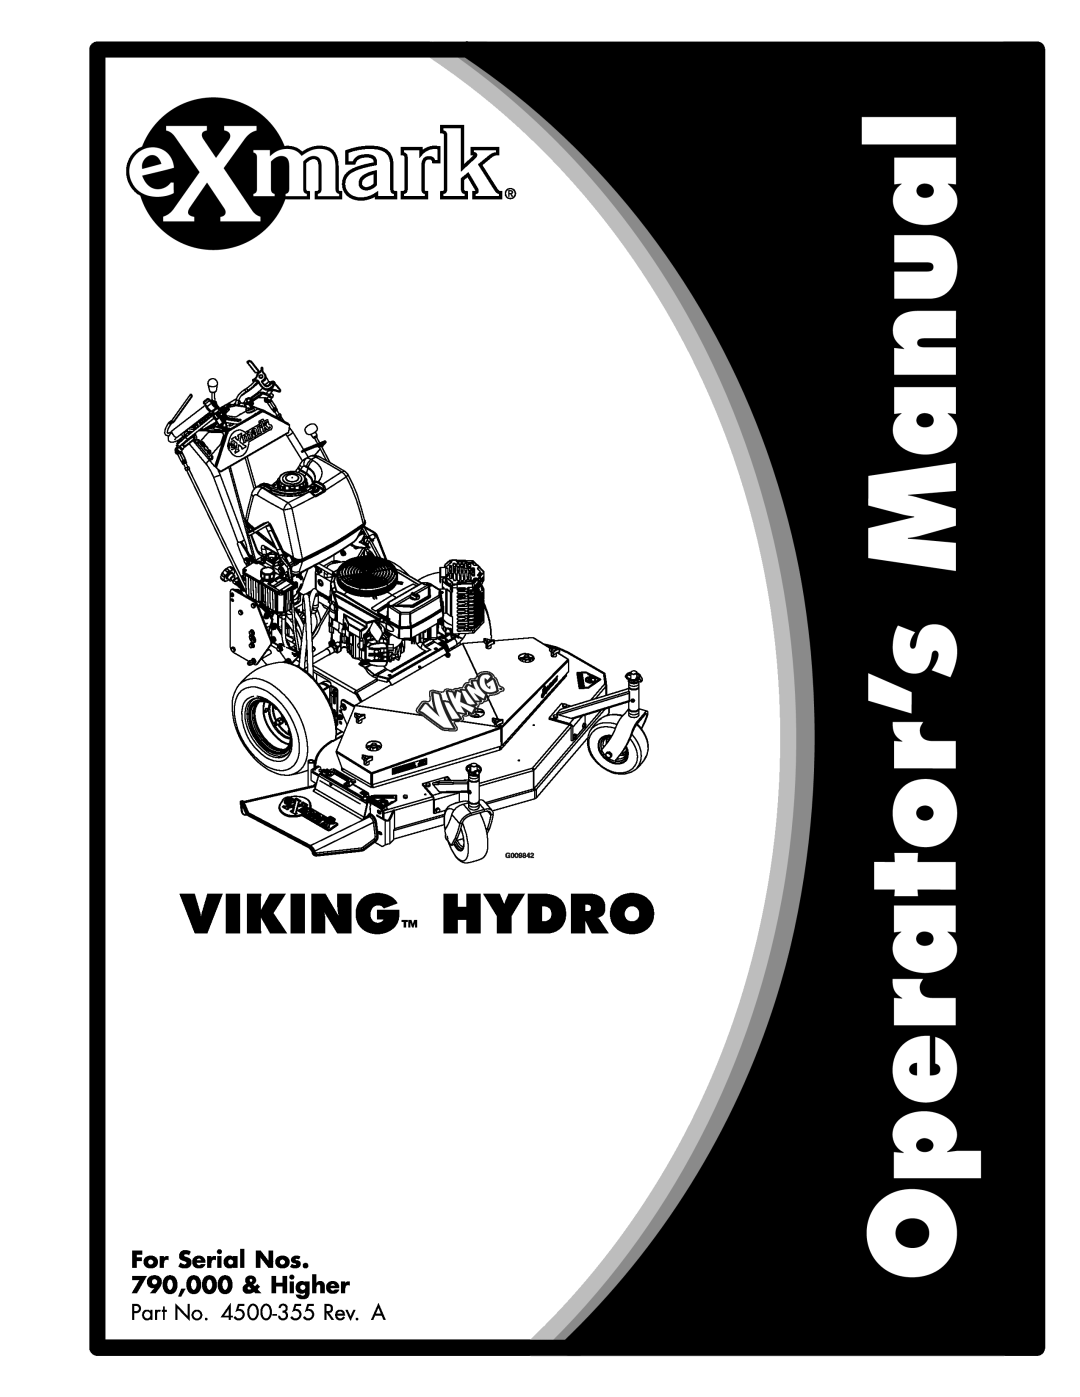 Exmark 4500-355 manual Viking Hydro, For Serial Nos 790,000 & Higher 